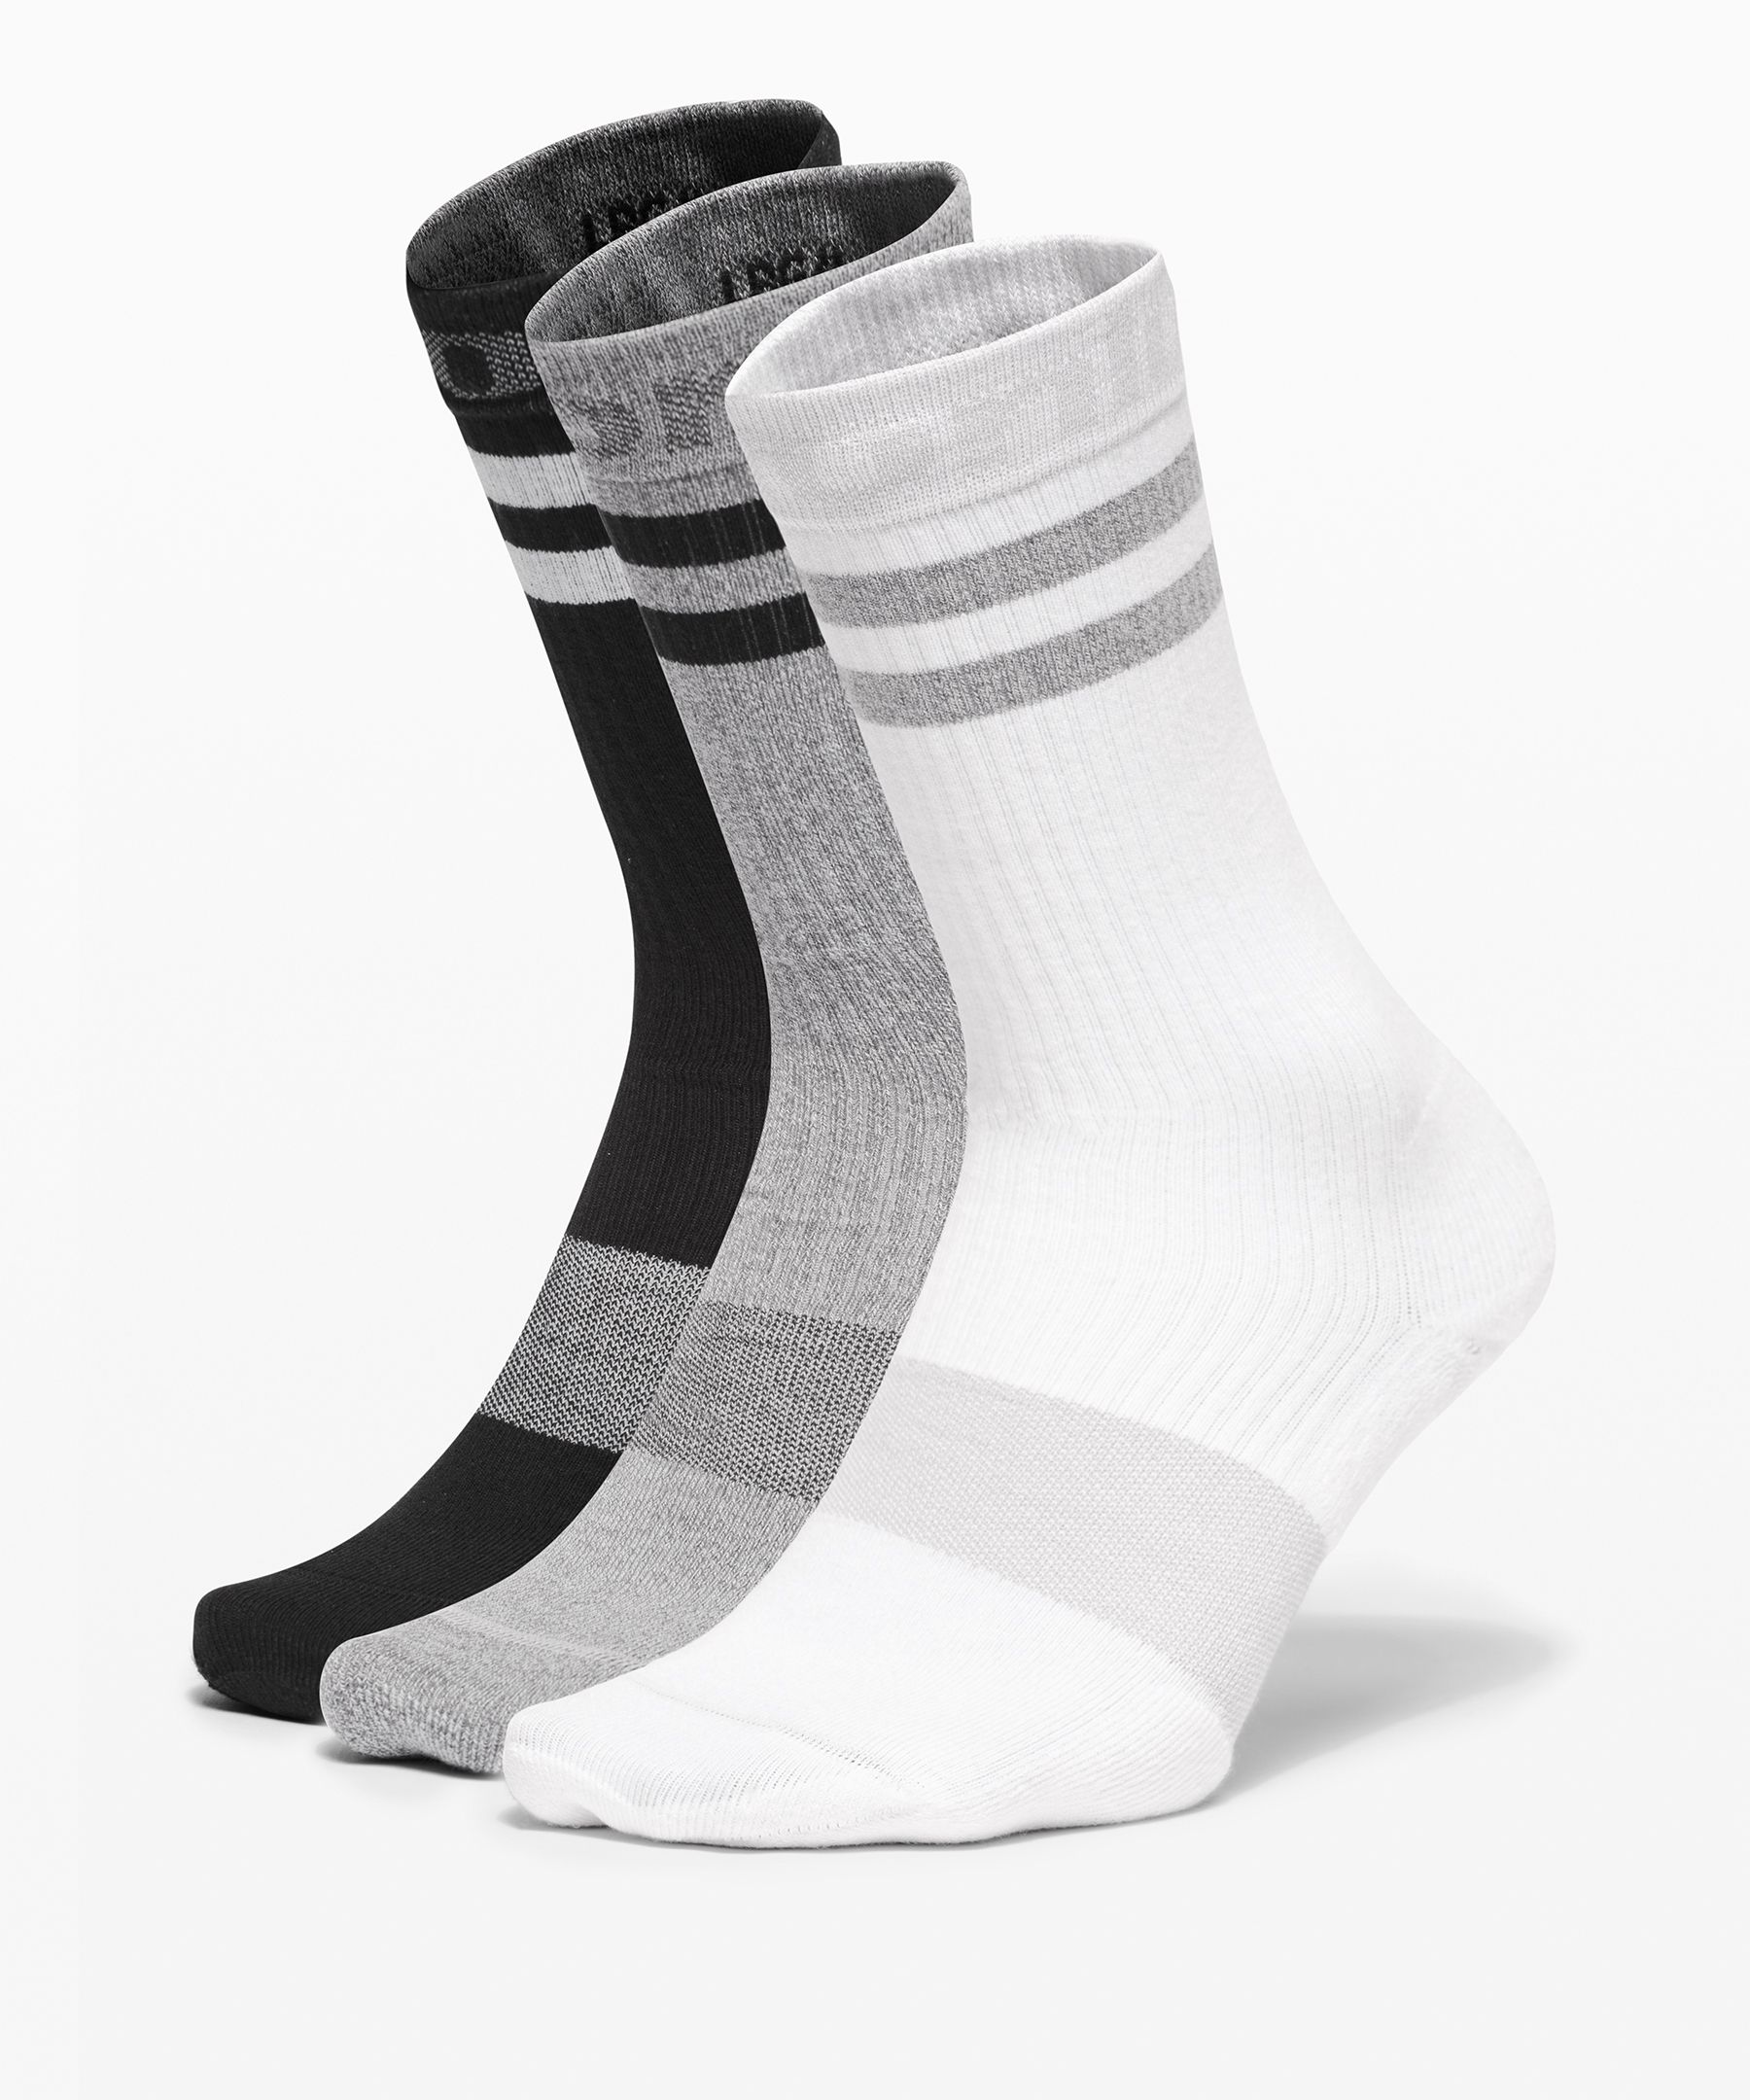 Lululemon Daily Stride Crew Socks 3 Pack Sport Stripe In White/heather Grey/black